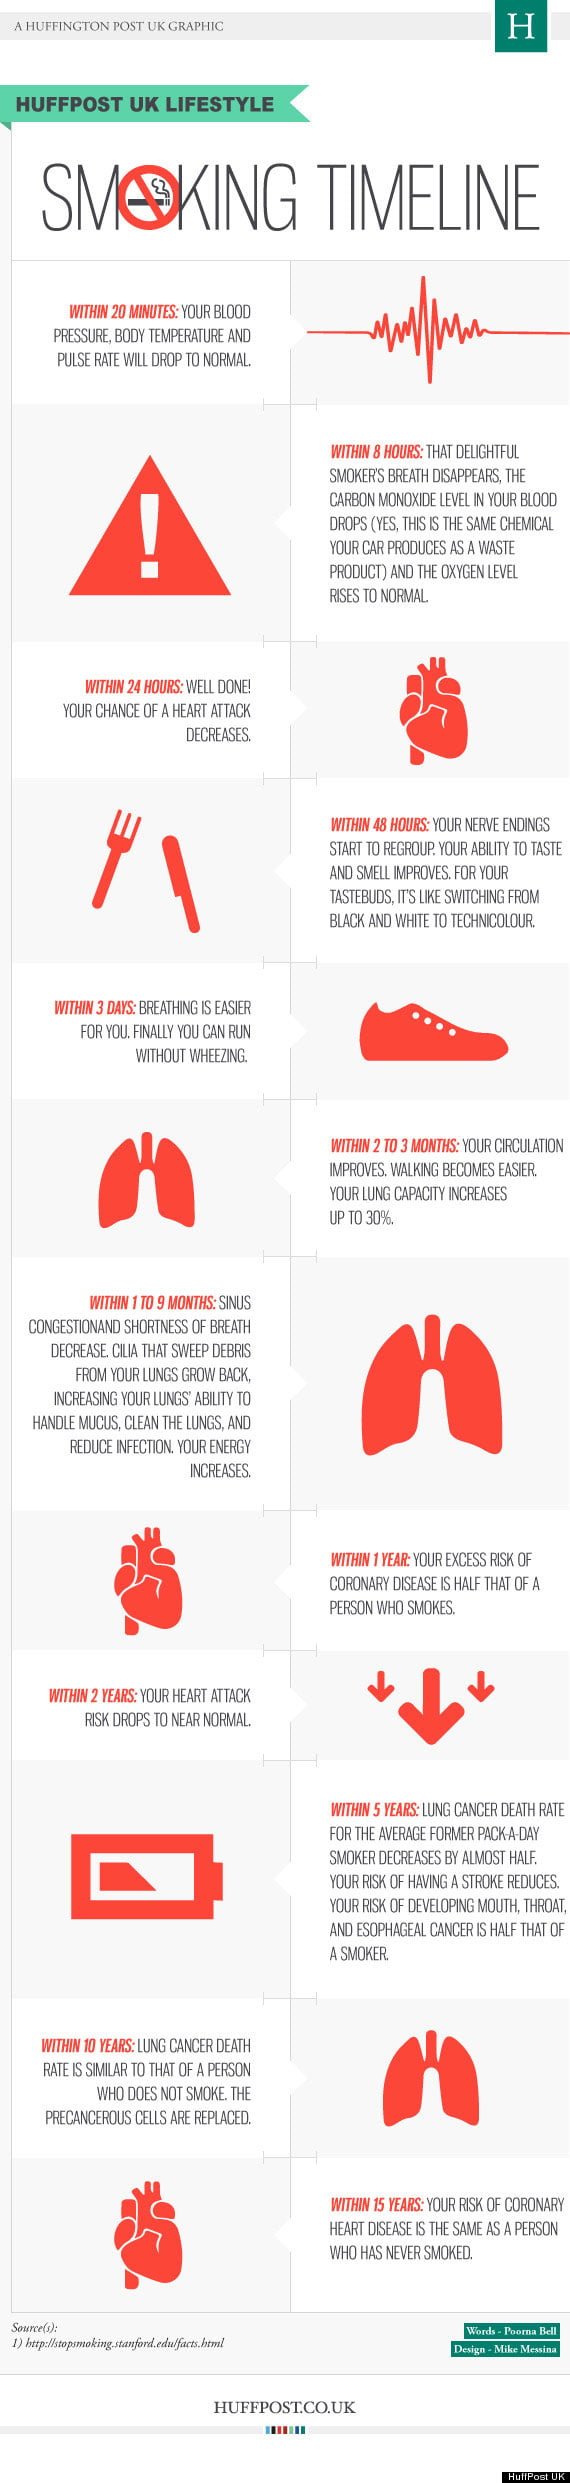 Smoking Timeline Infographic